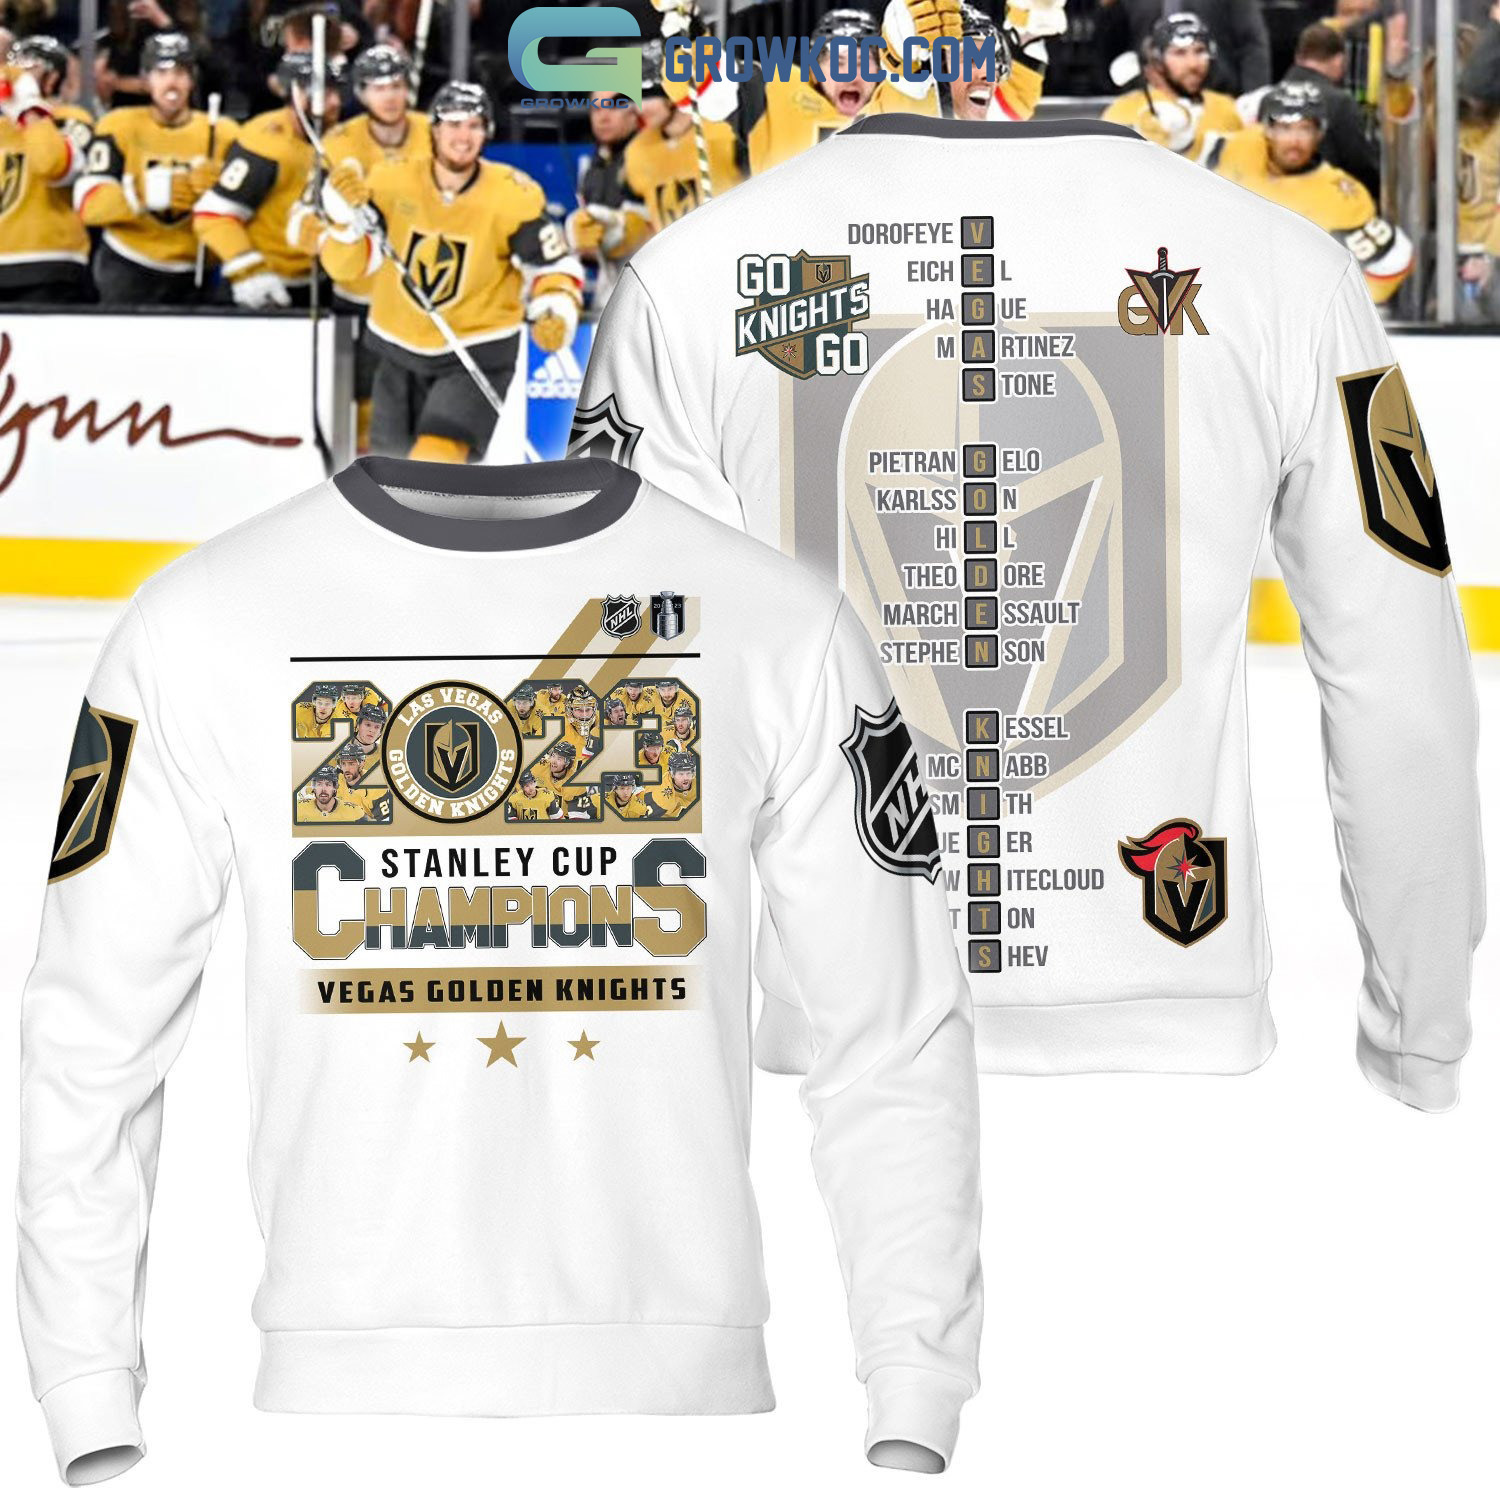 Vegas Golden Knights 2023 Stanley Cup Champions White Design Hoodie T Shirt  - Growkoc